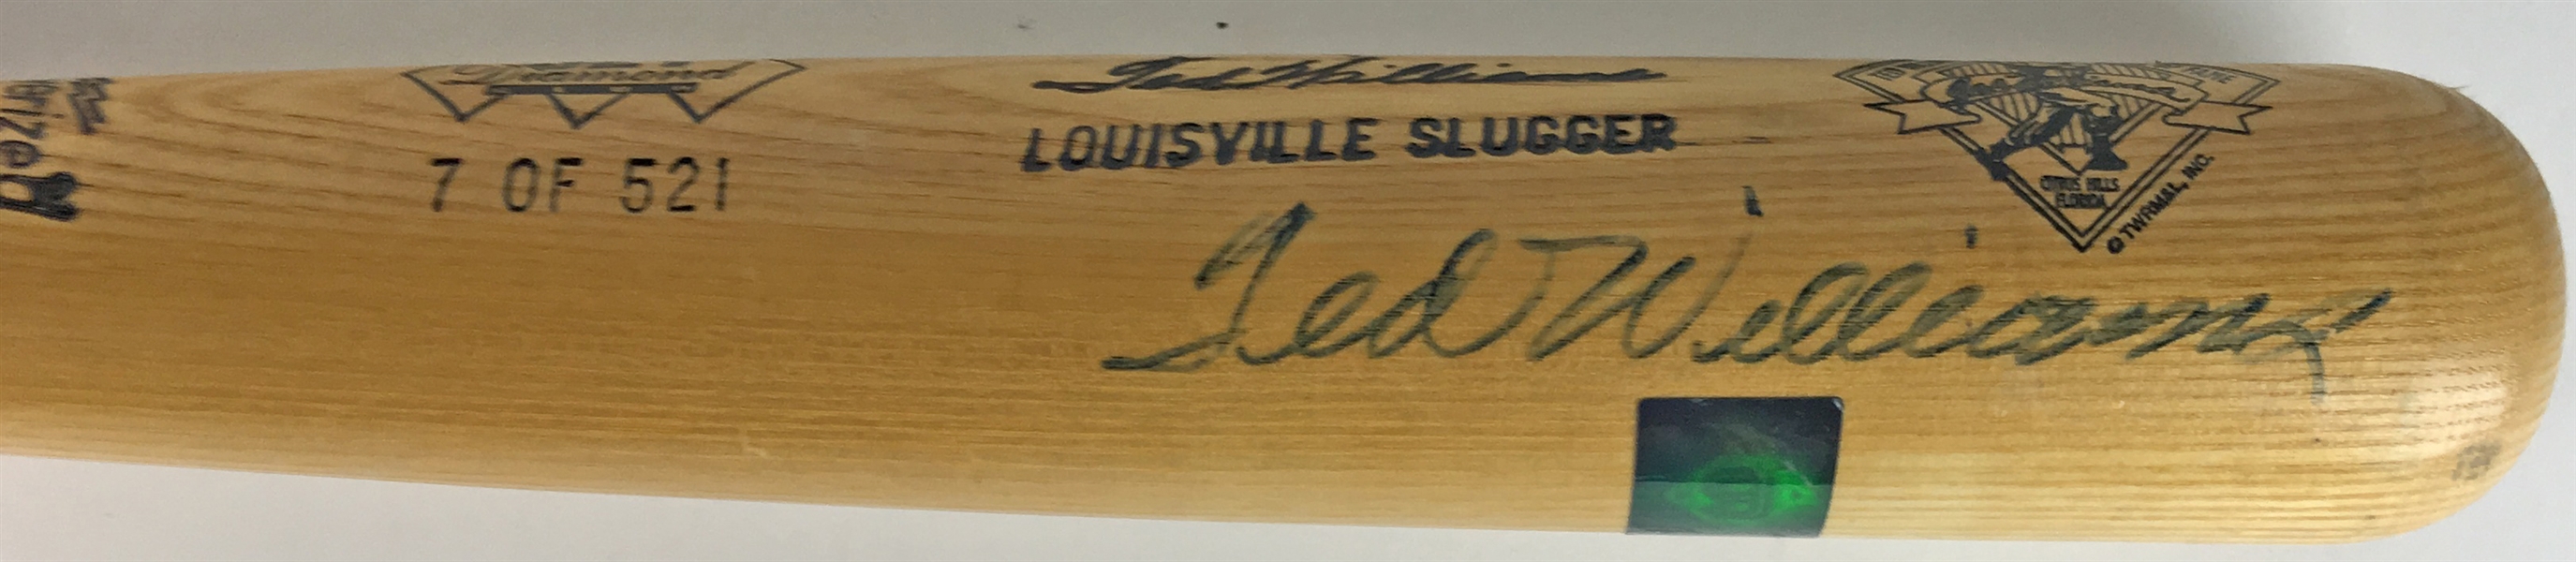 Ted Williams Signed Limited Edition Home Run Baseball Bat (Green Diamond & JSA)